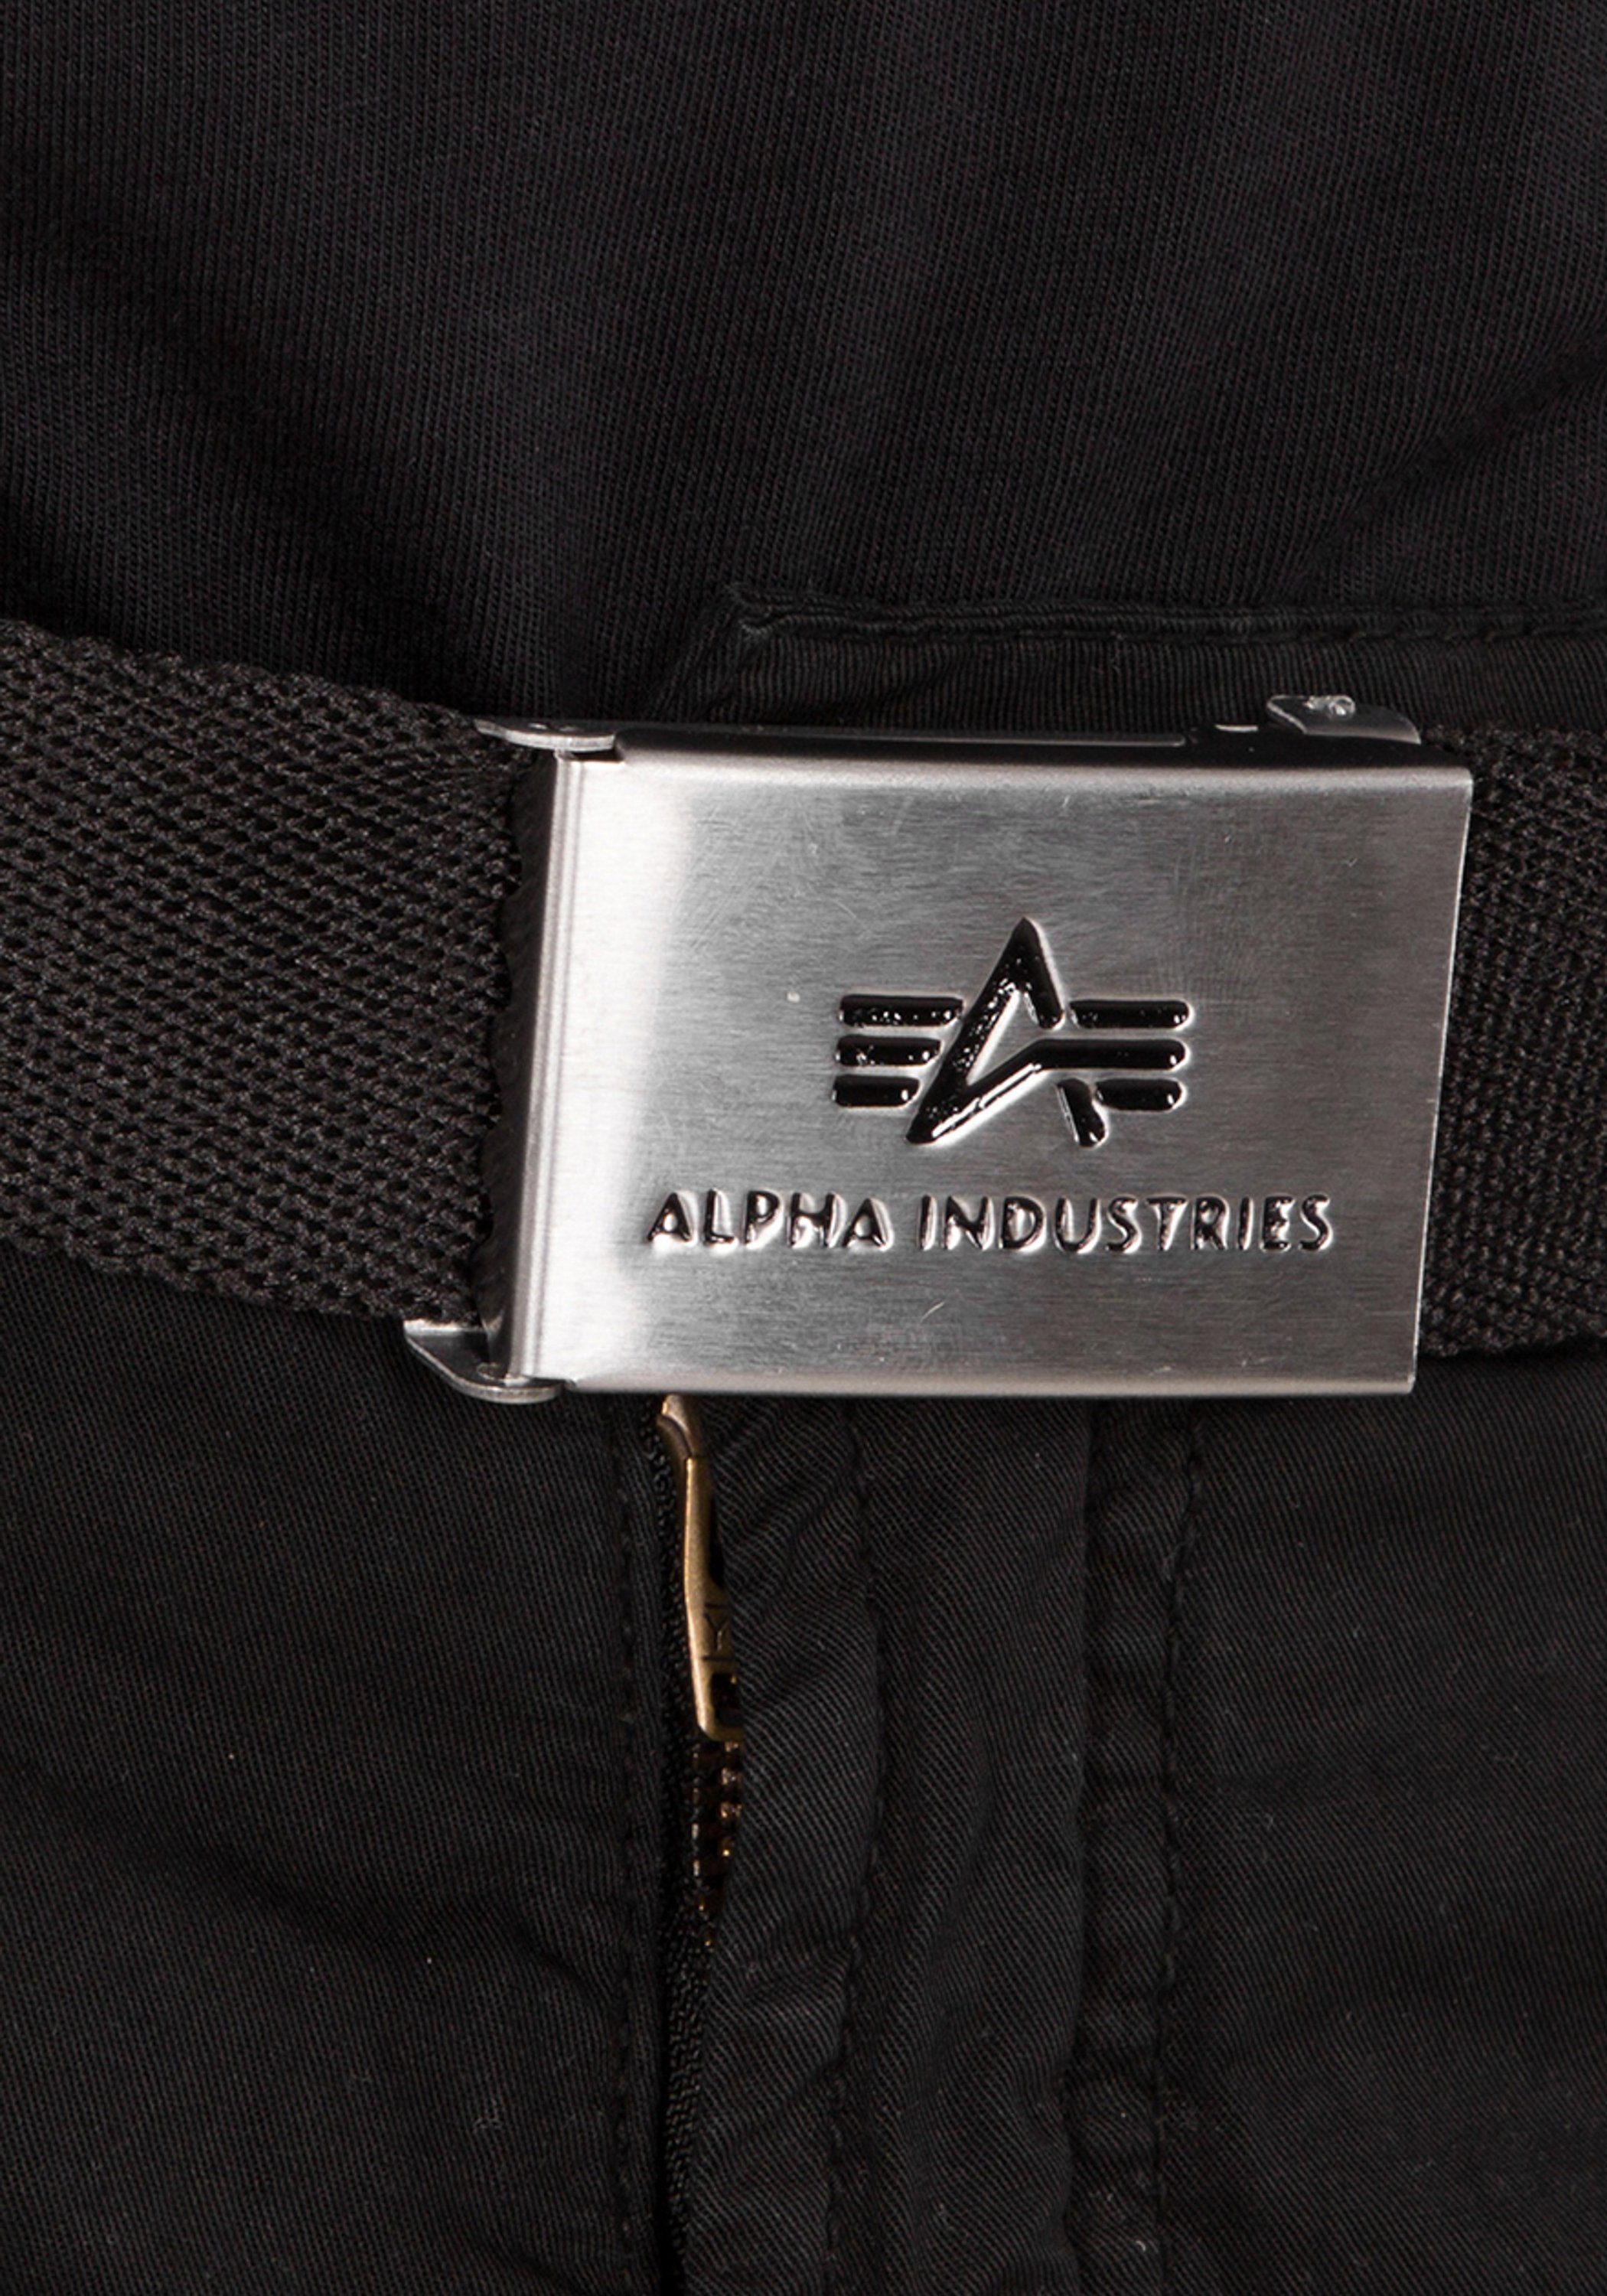 Industries A Big Belts Ledergürtel Industries Belt Alpha Accessoires - Alpha